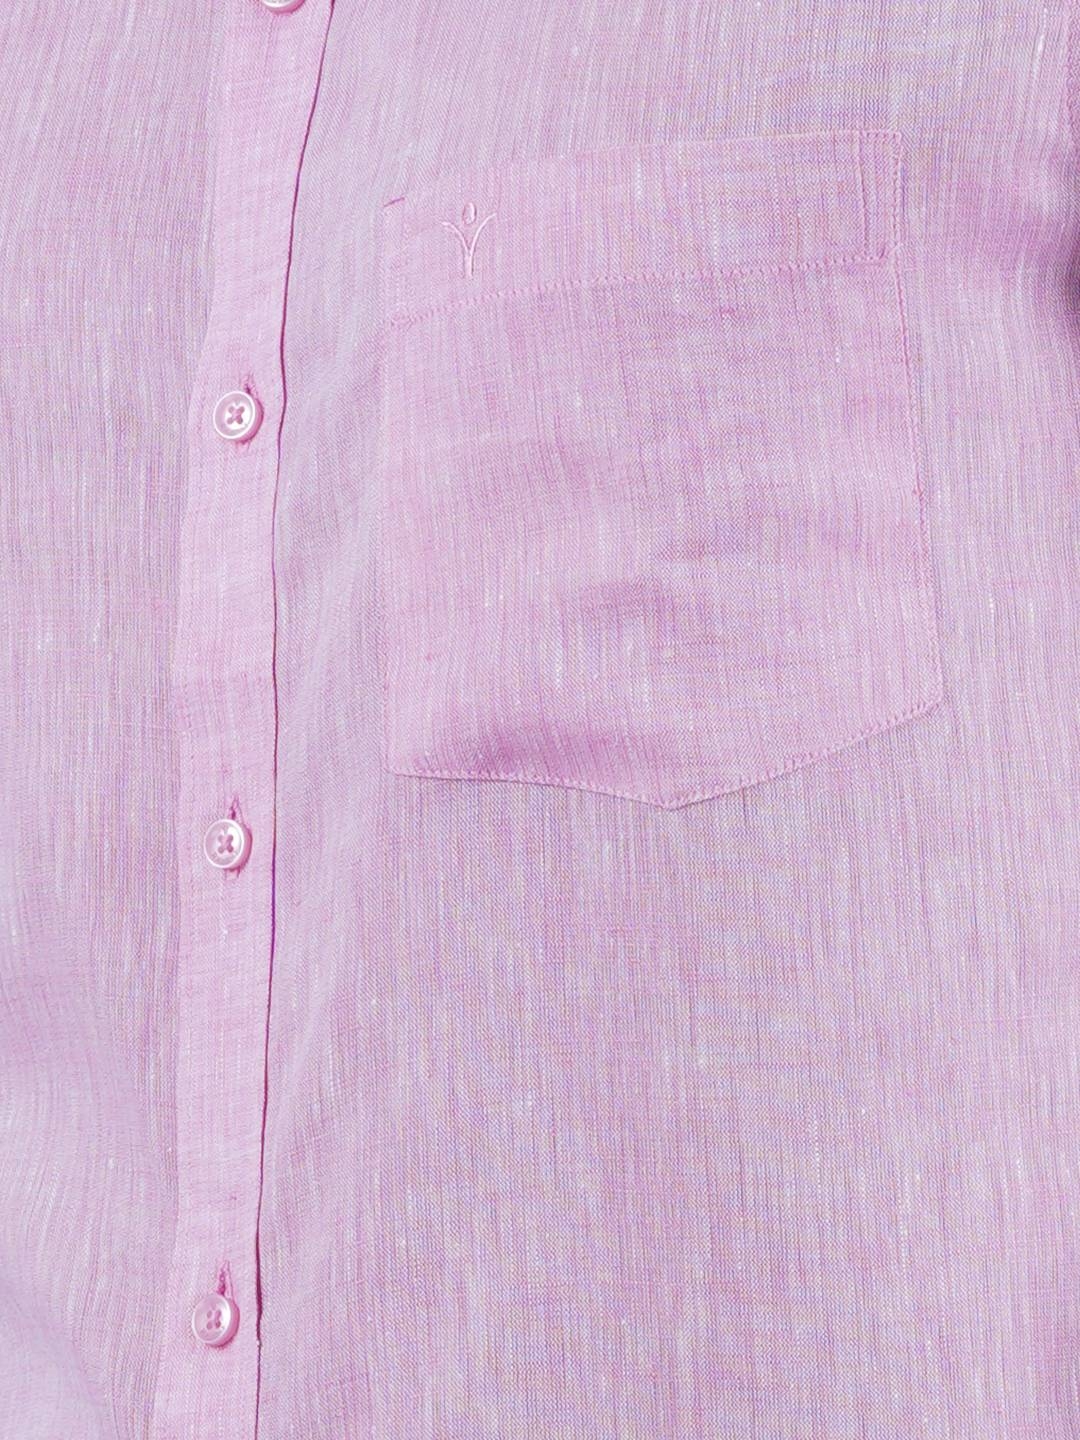 Ramraj Cotton | Ramraj Cotton 100% Pure Linen Solid Smart Fit Shirt 0